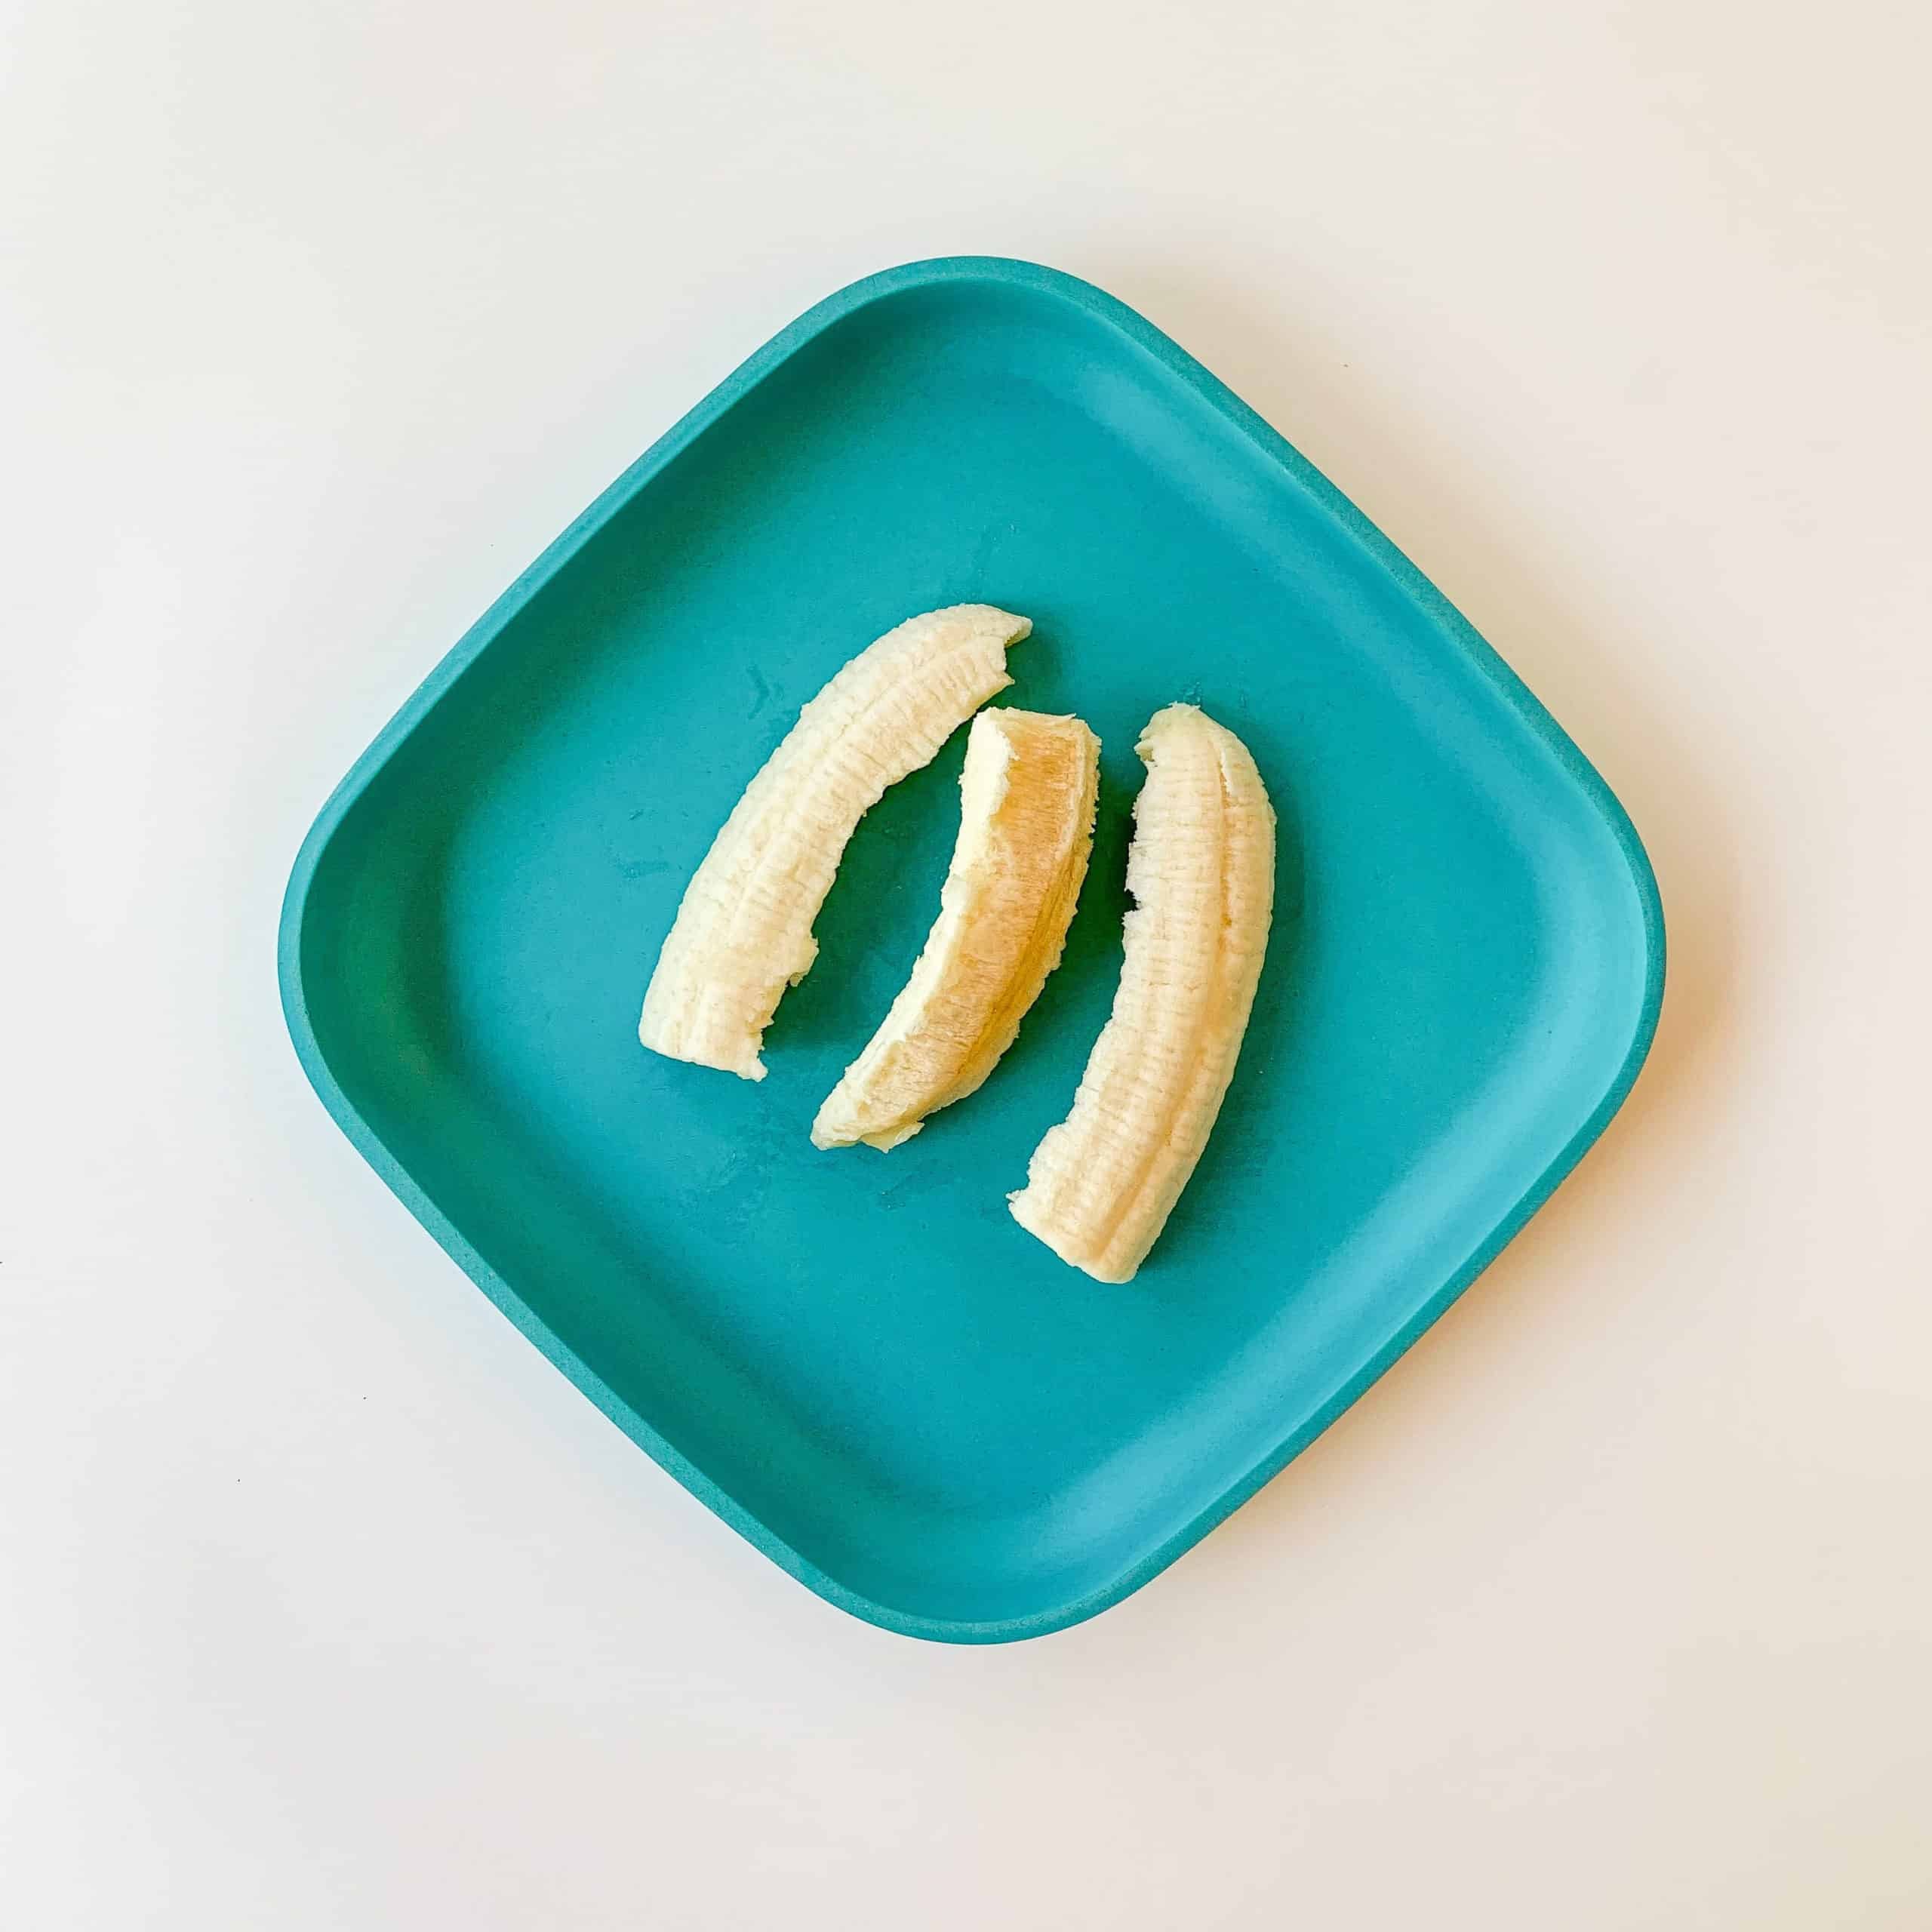 banana fingers on a blue plate